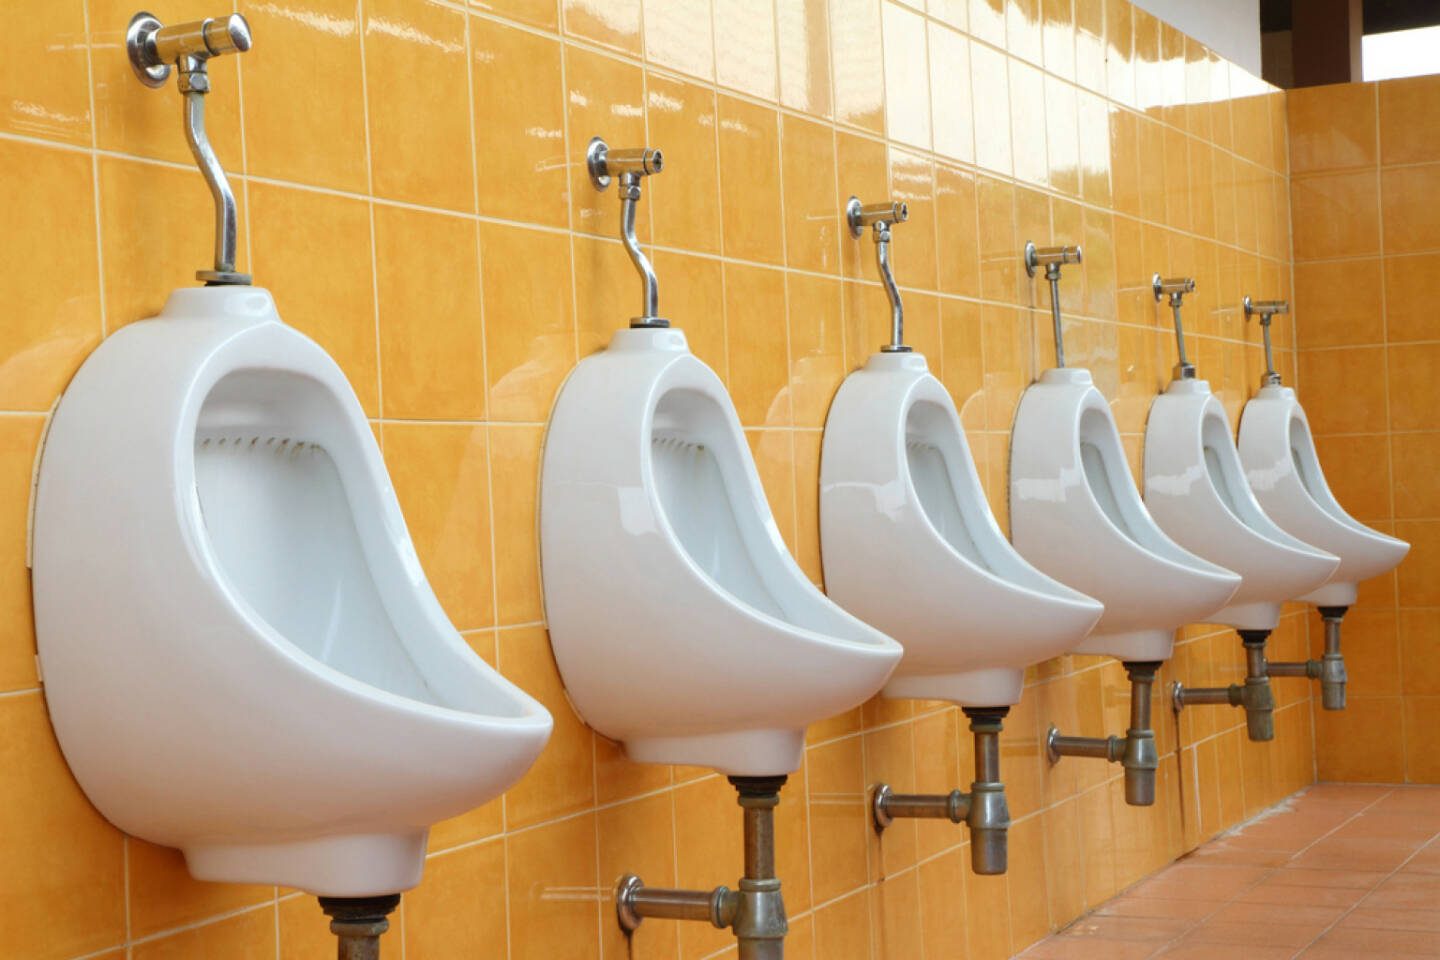 Pissoir, Klo, schlecht, vergessen, http://www.shutterstock.com/de/pic-97147406/stock-photo-white-porcelain-urinals-in-public-toilets.html